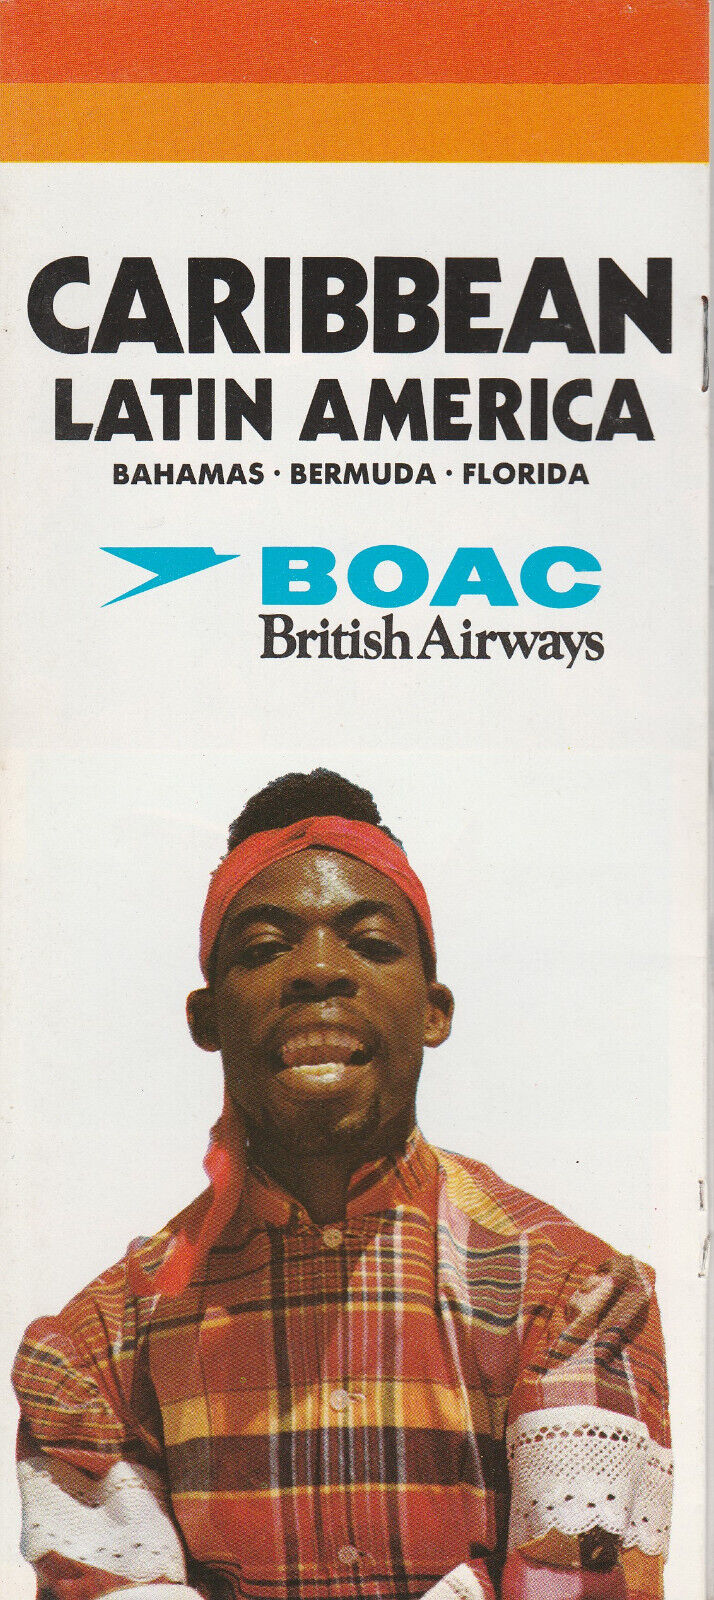 BOAC UK airline Caribbean Latin America promotion brochure 1973